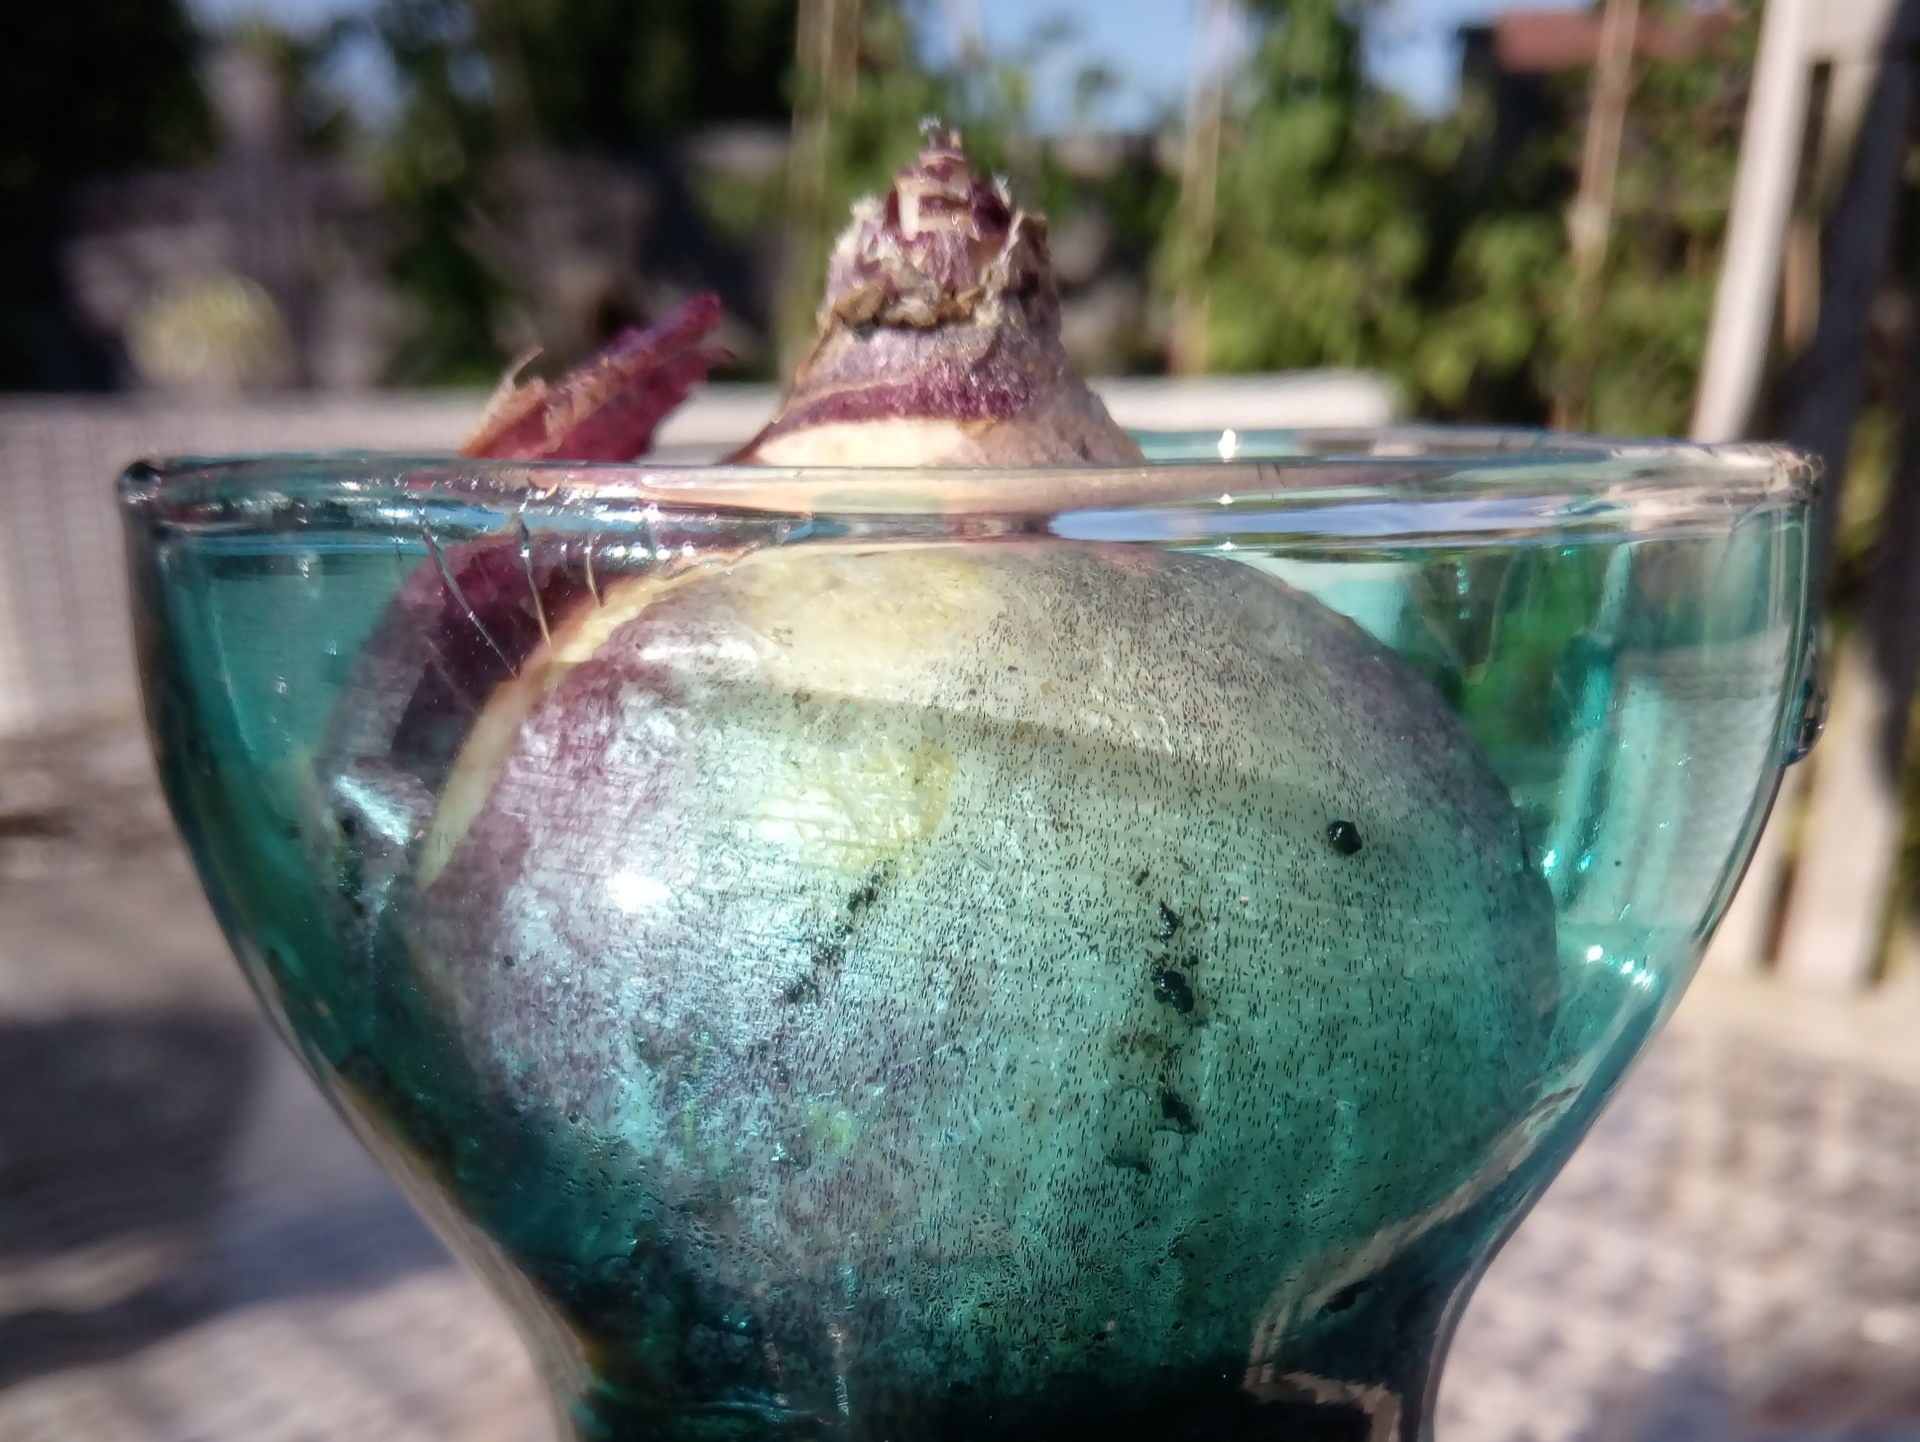 Prepared Hyacinth Bulb in a Glass Jar